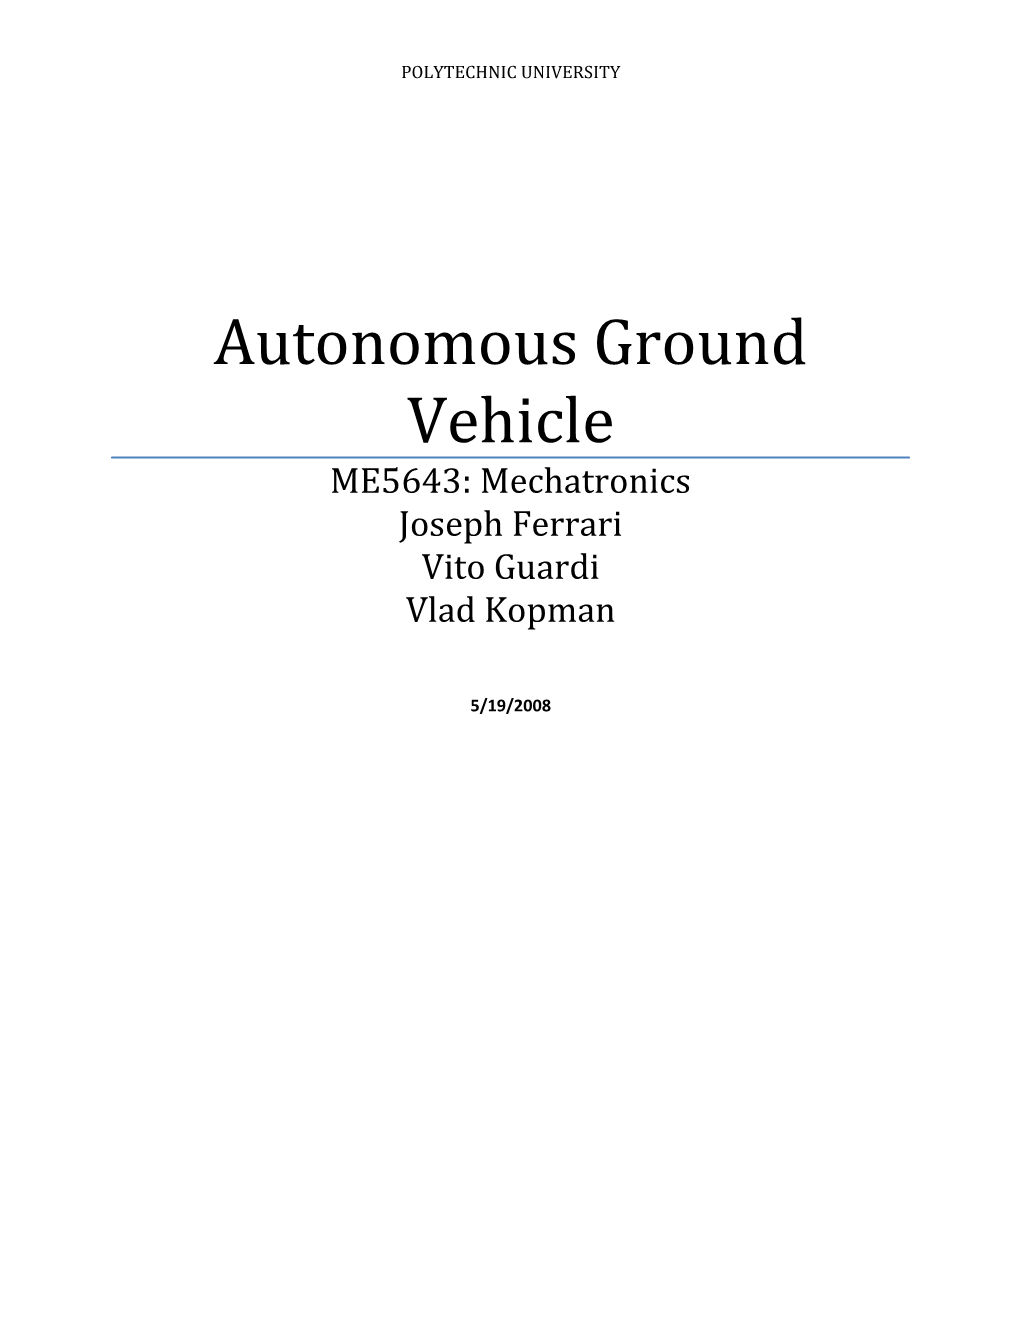 Autonomous Ground Vehicle